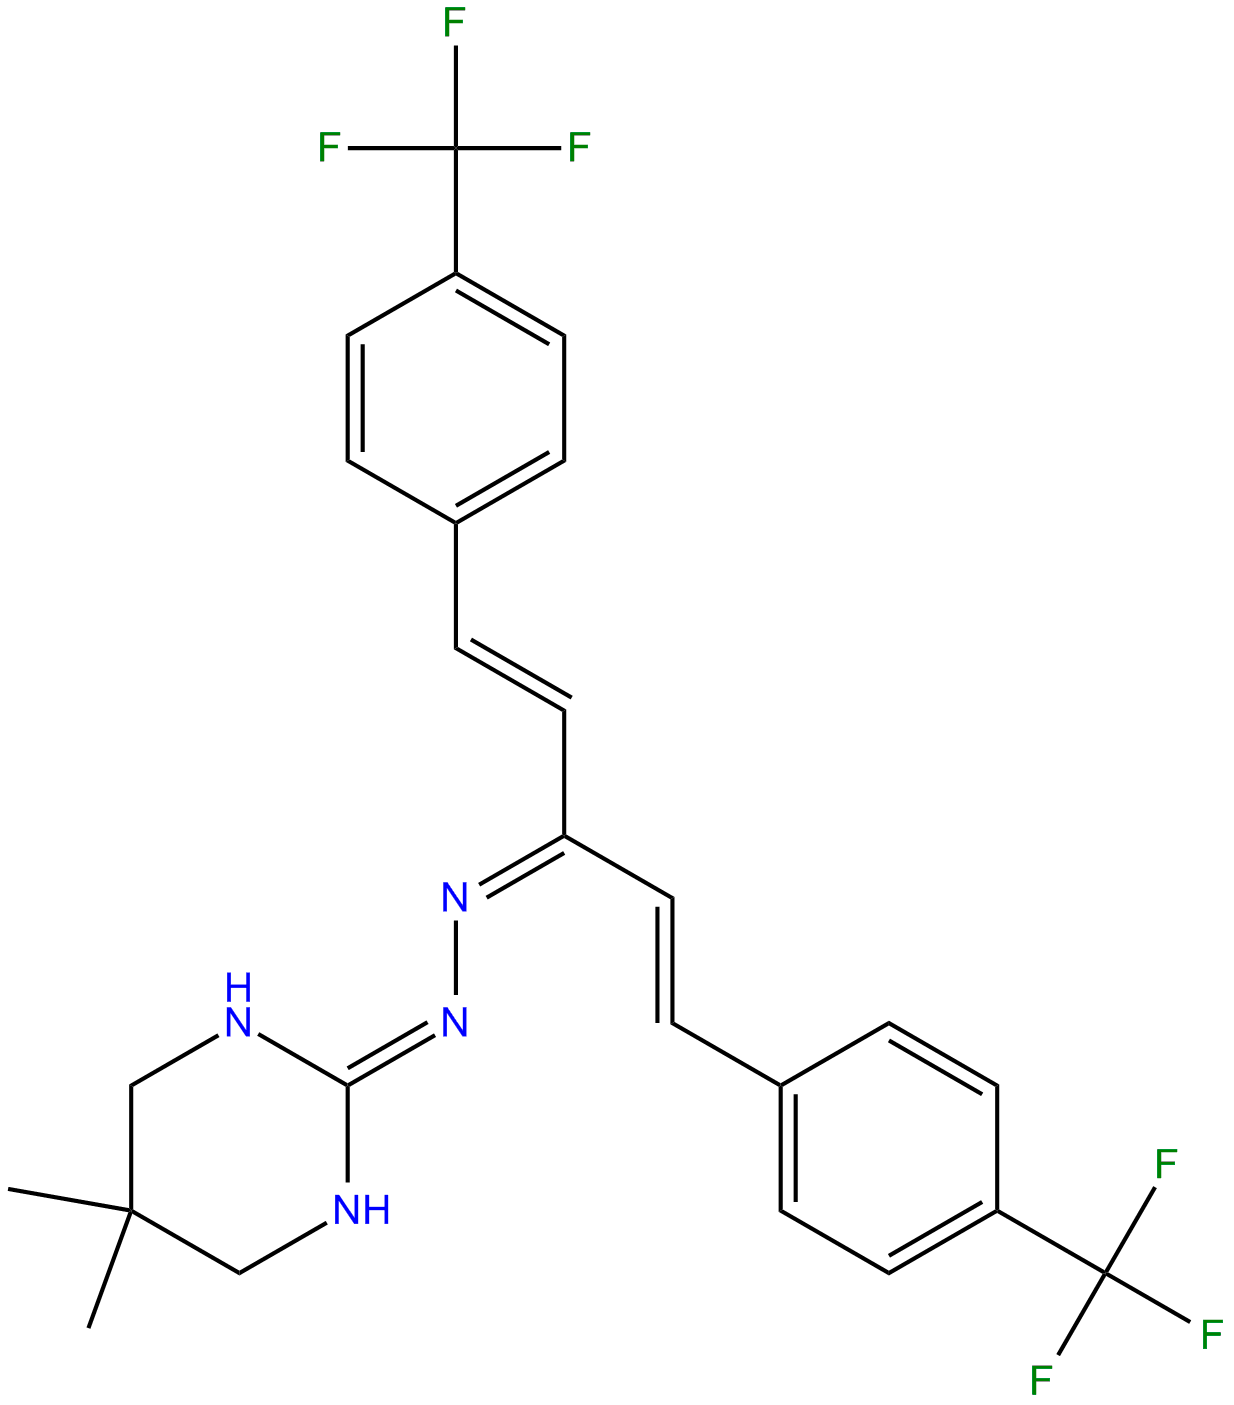 Image of tetrahydro-5,5-dimethyl-2(1H)-pyrimidinone